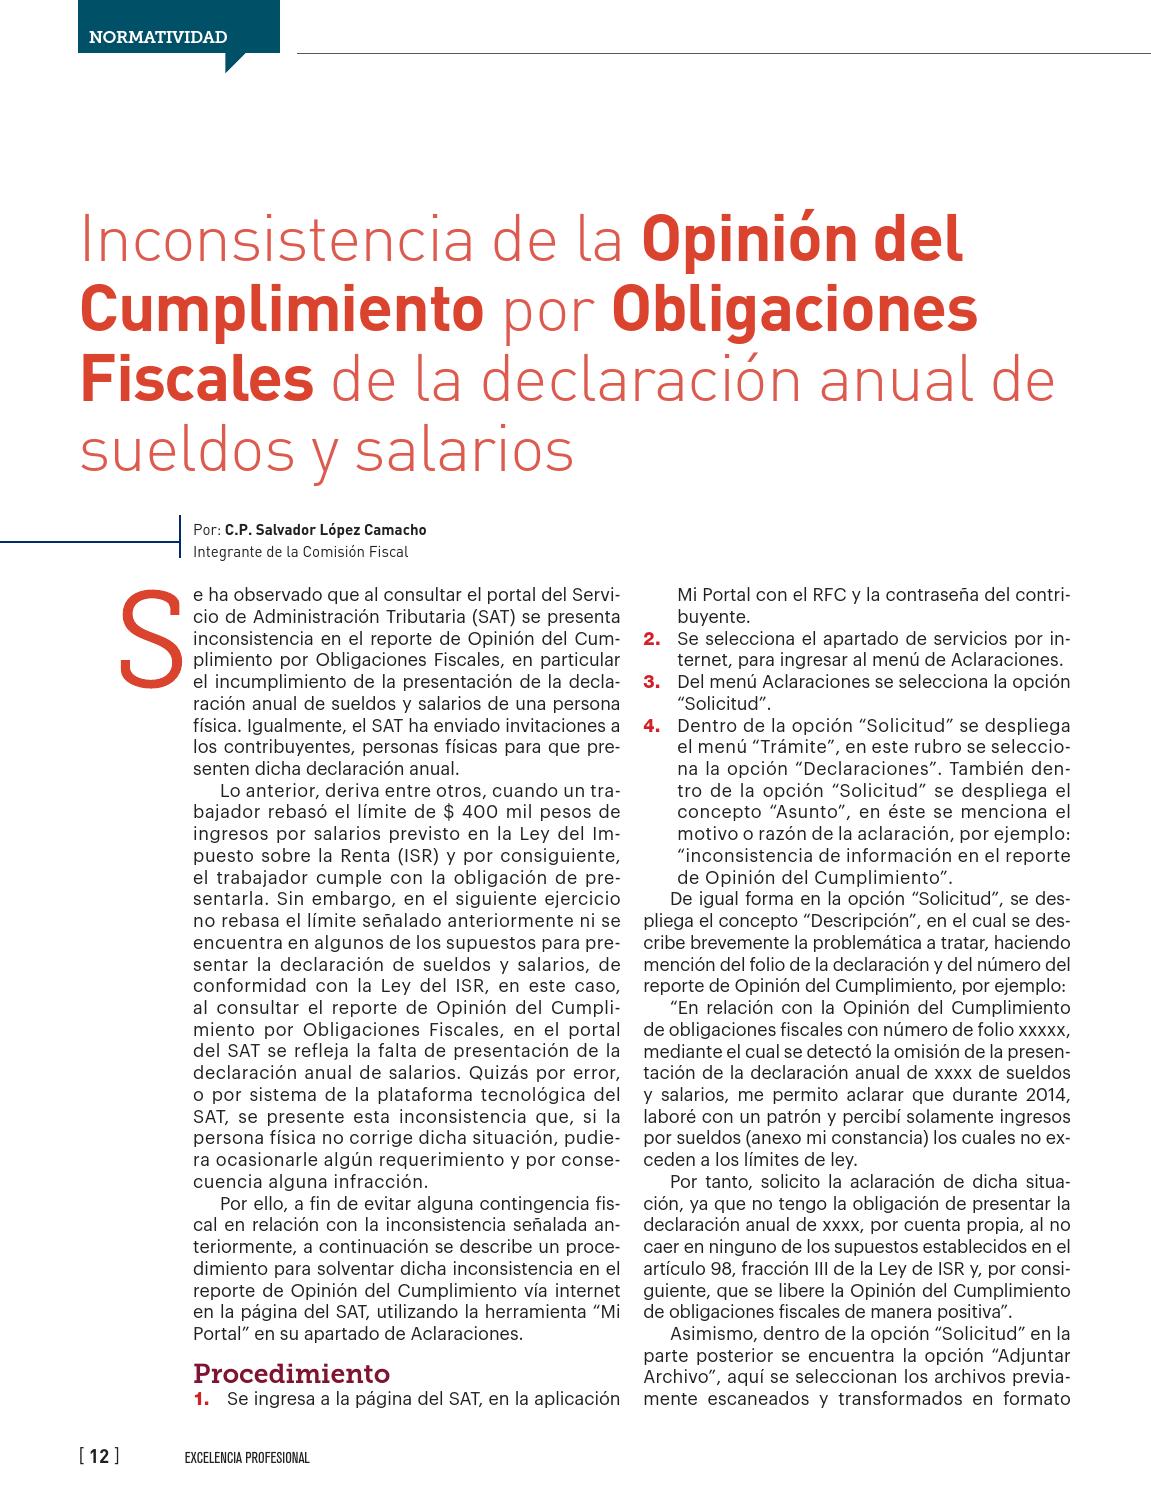 2015-09-03_inconsistencias_opinion_fiscal_sat (1)